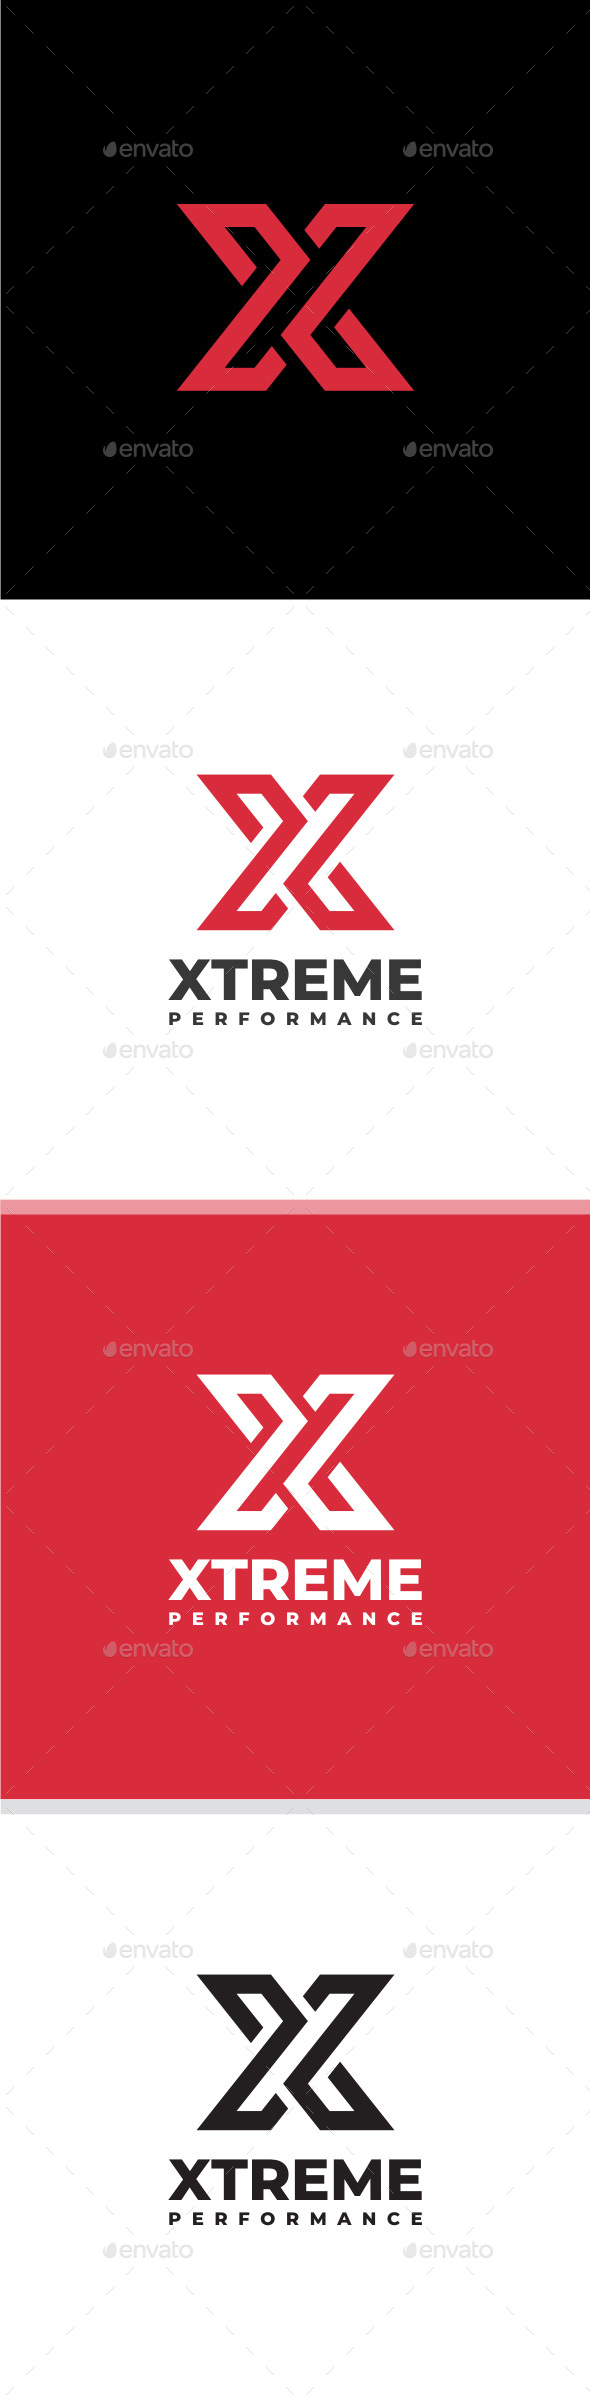 Xtreme - Letter X Logo Template